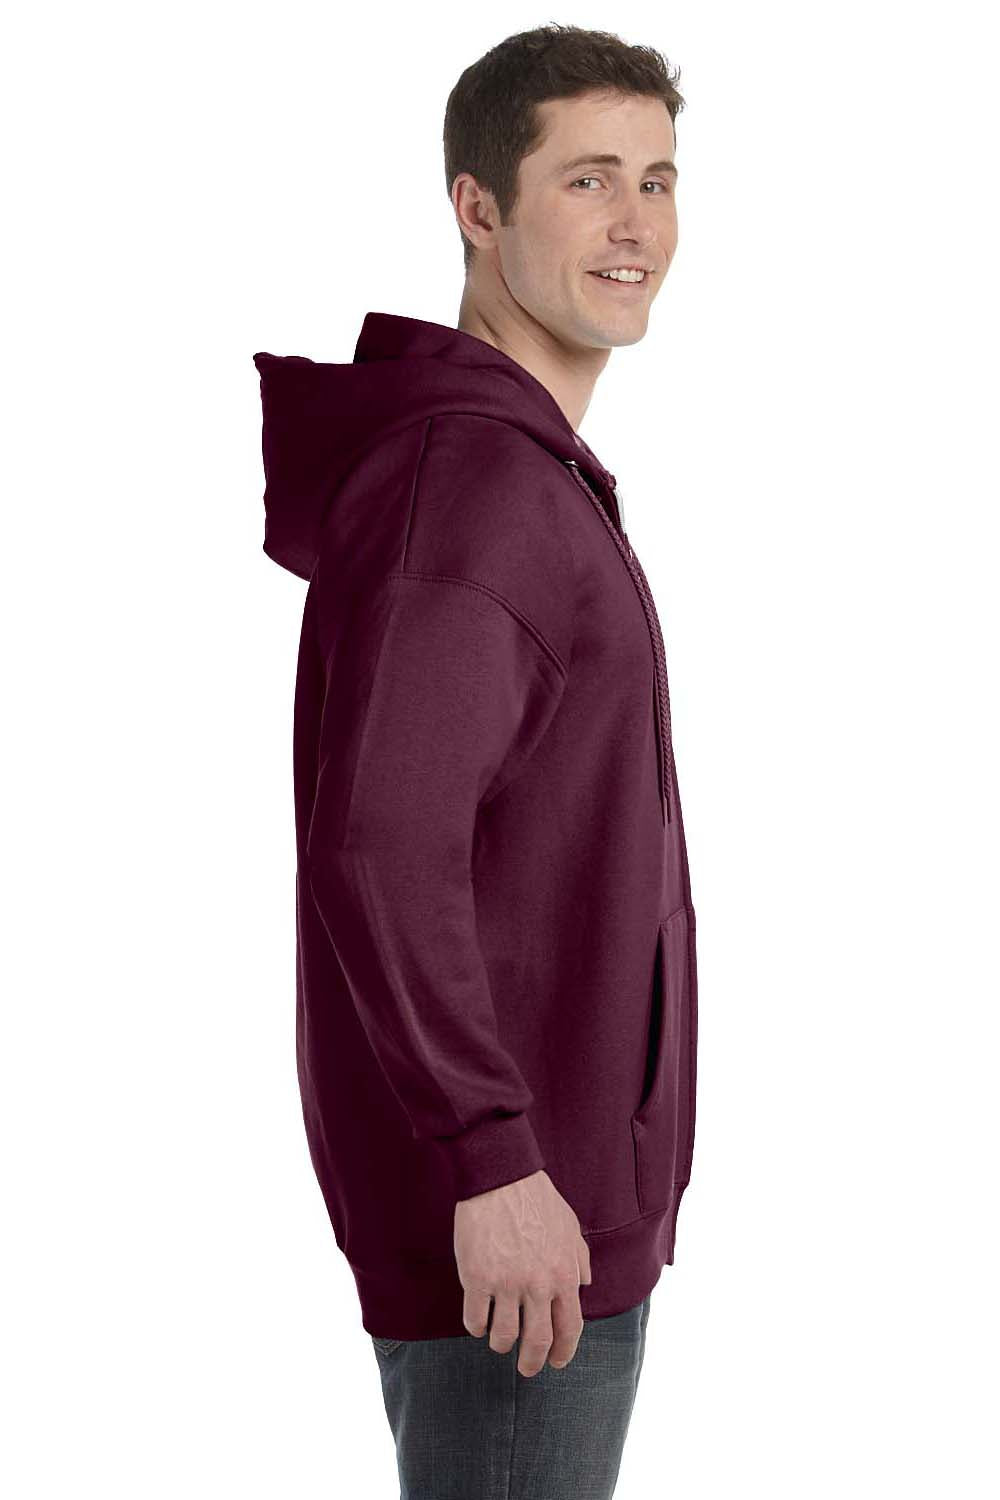 Hanes F280 - Ultimate Cotton® Full-Zip Hooded Sweatshirt